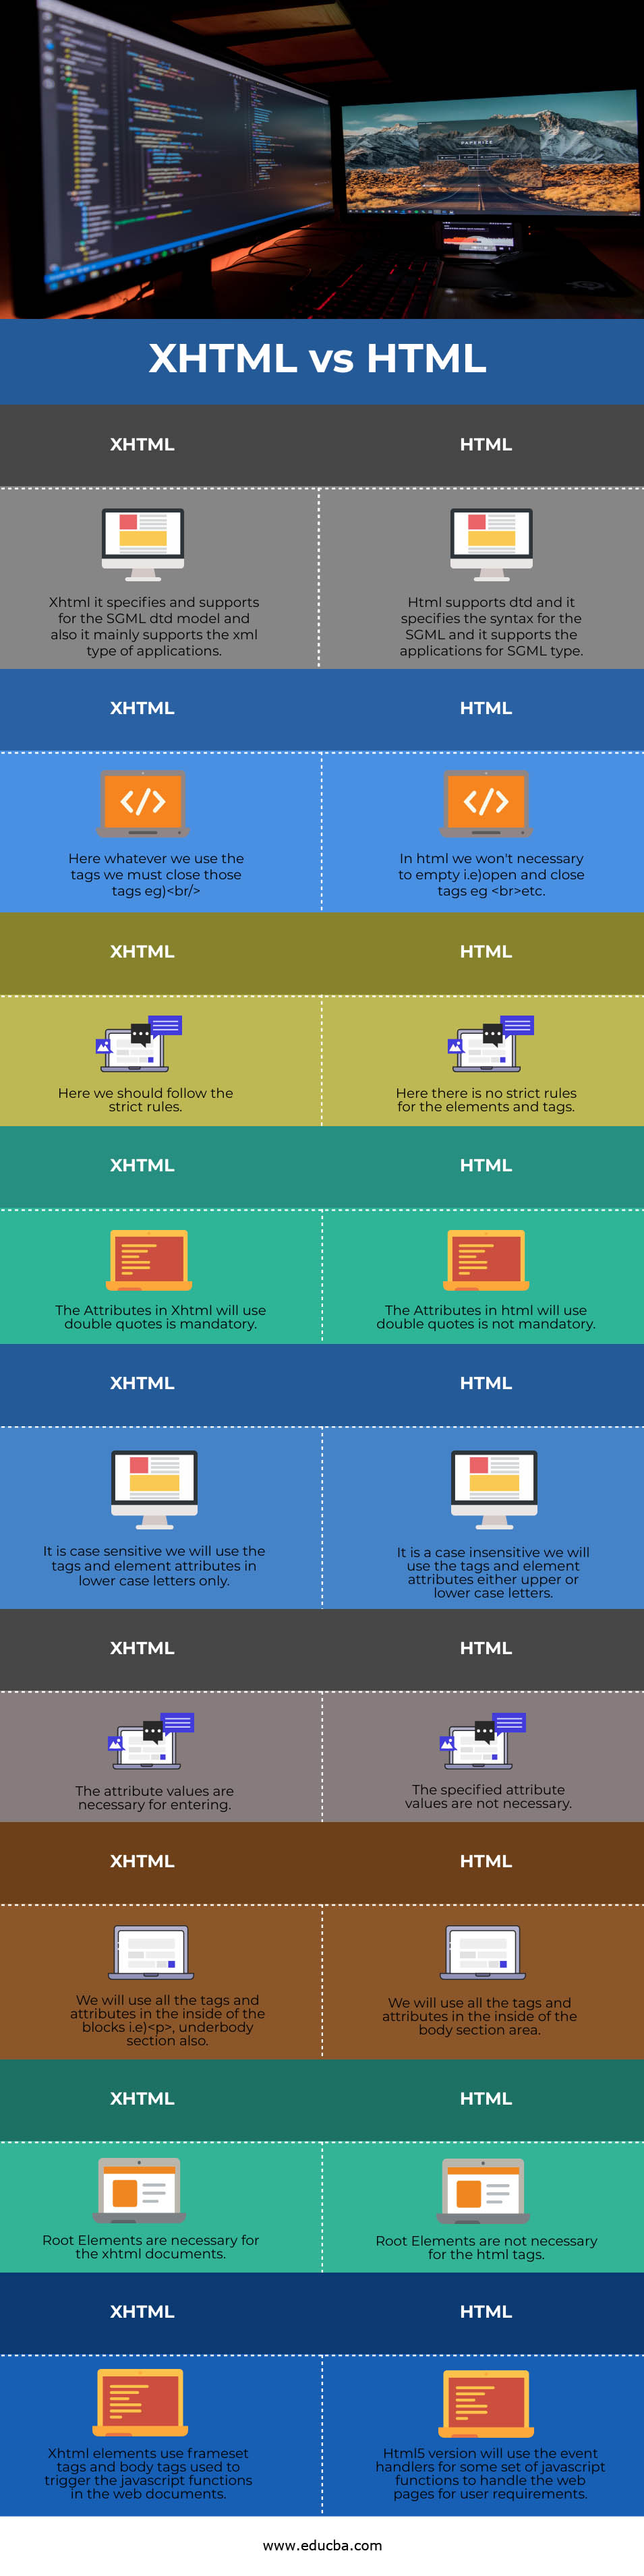 XHTML vs HTML info